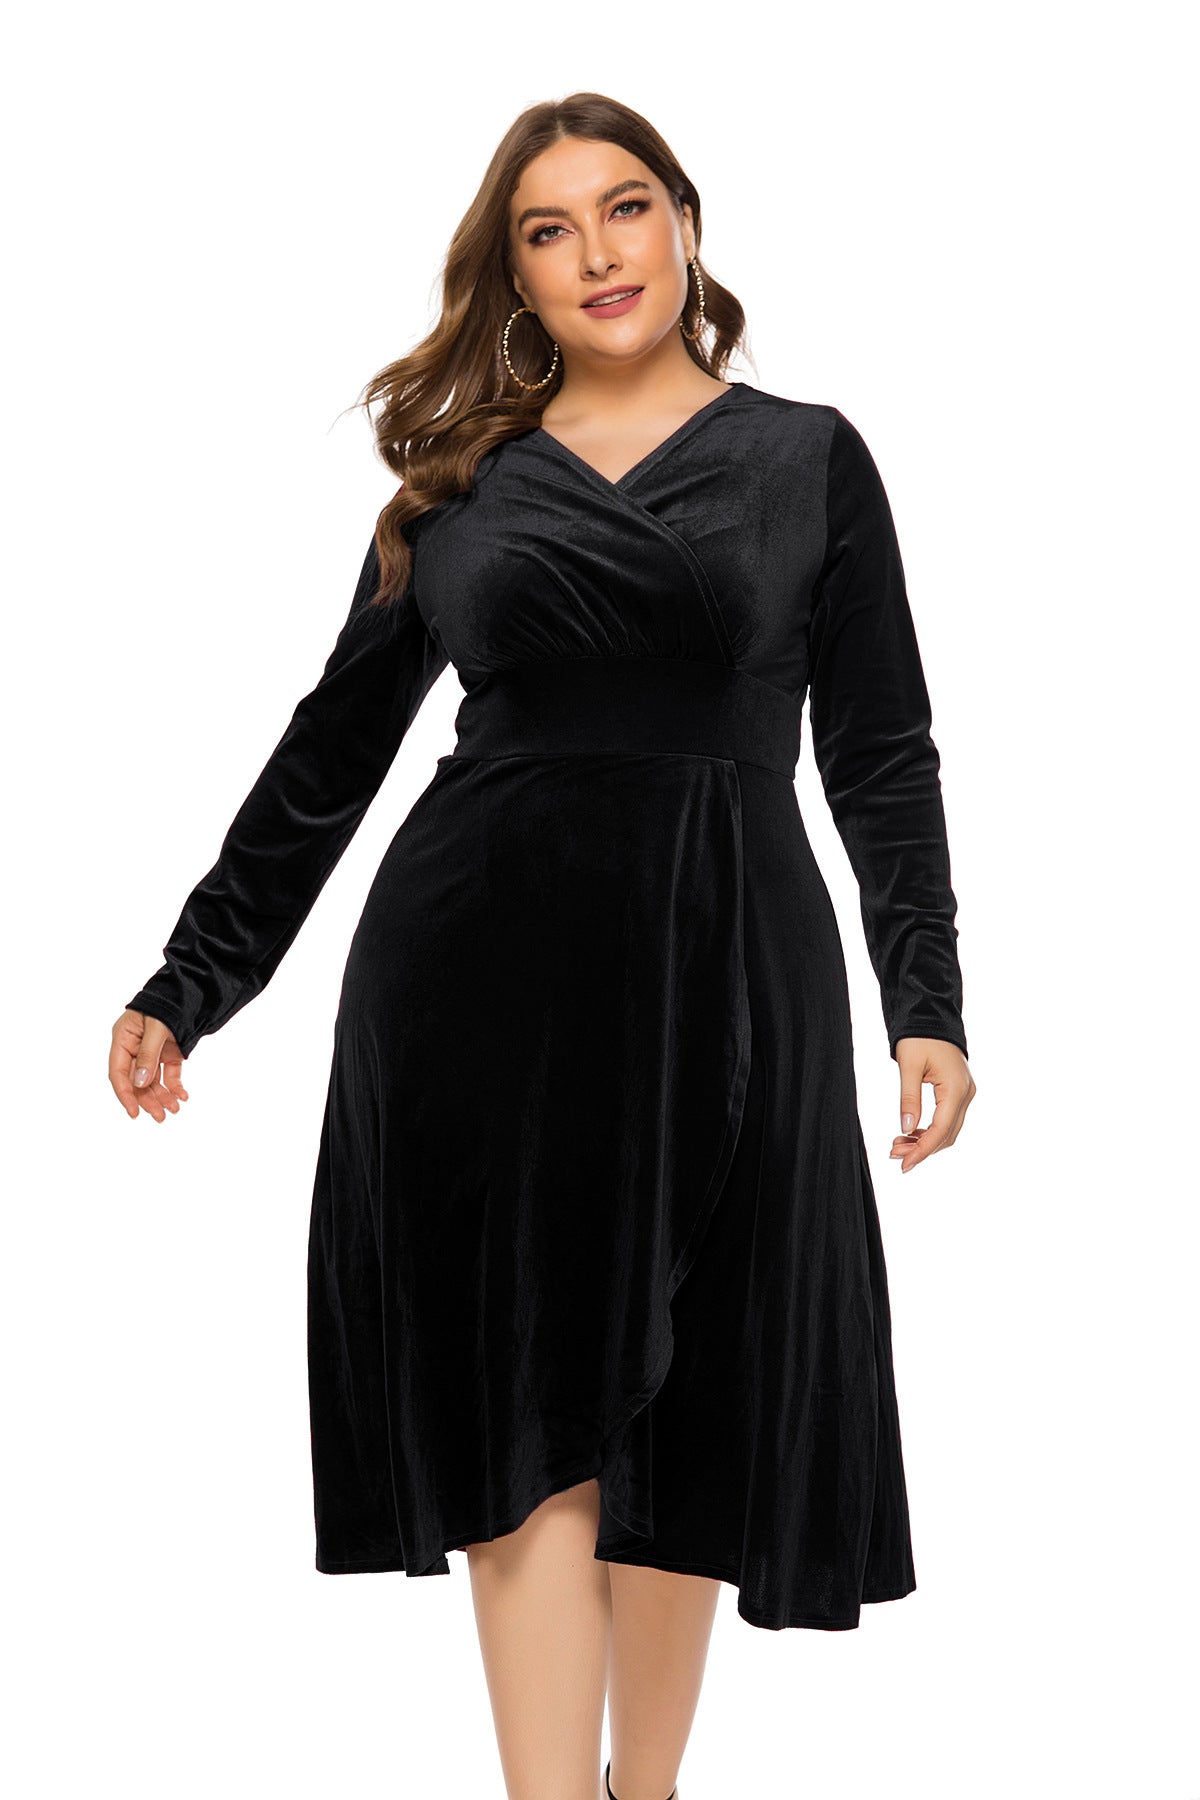 Long Sleeves Women Plus Sizes Fall Dresses-Dresses-Black-XL-Free Shipping at meselling99